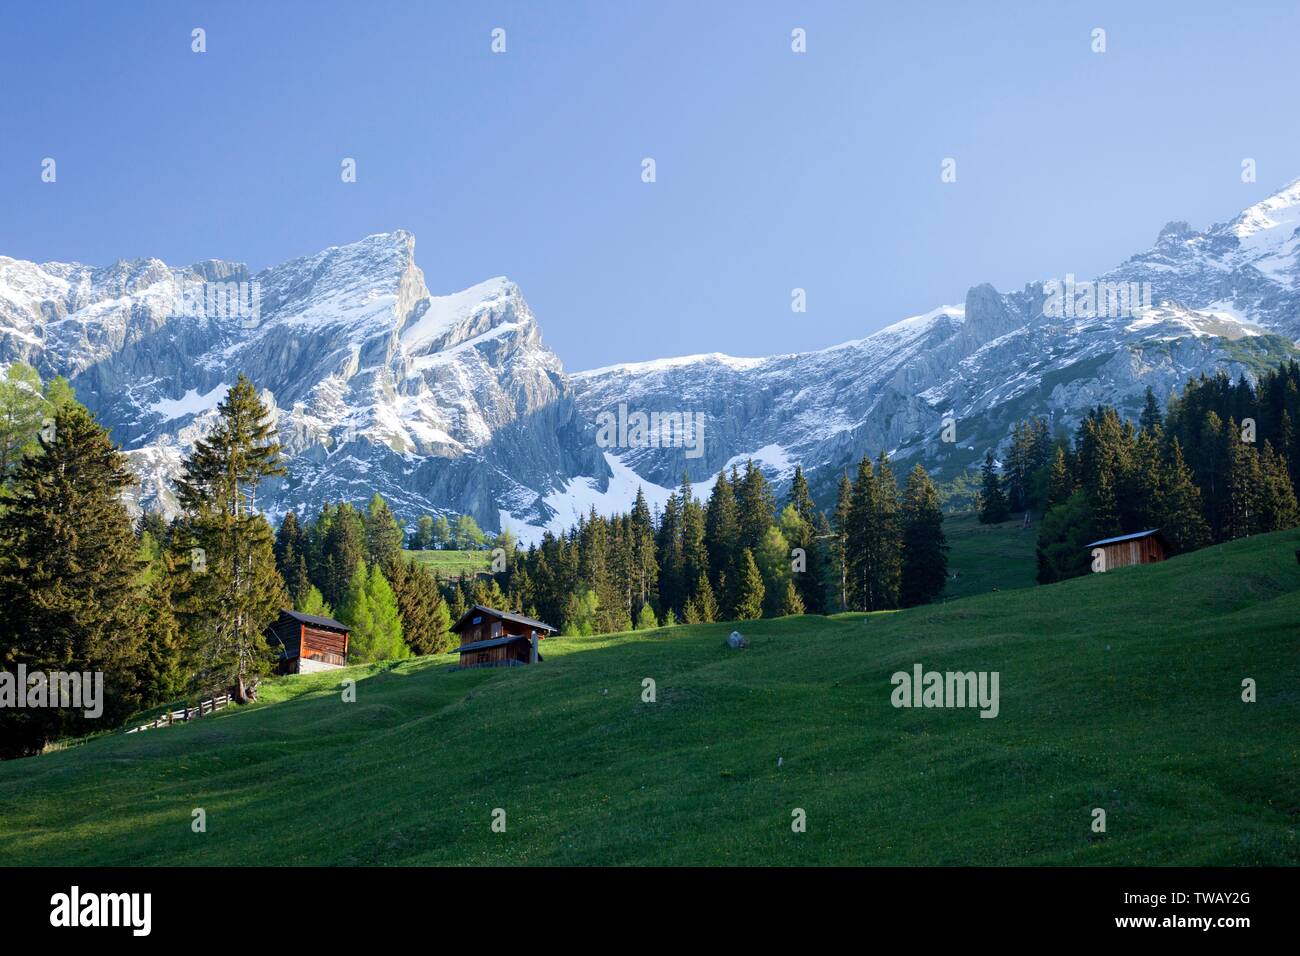 Austria, Tyrol, Lechtal Alps, Eisenspitze (peak) from the South. Stock Photo